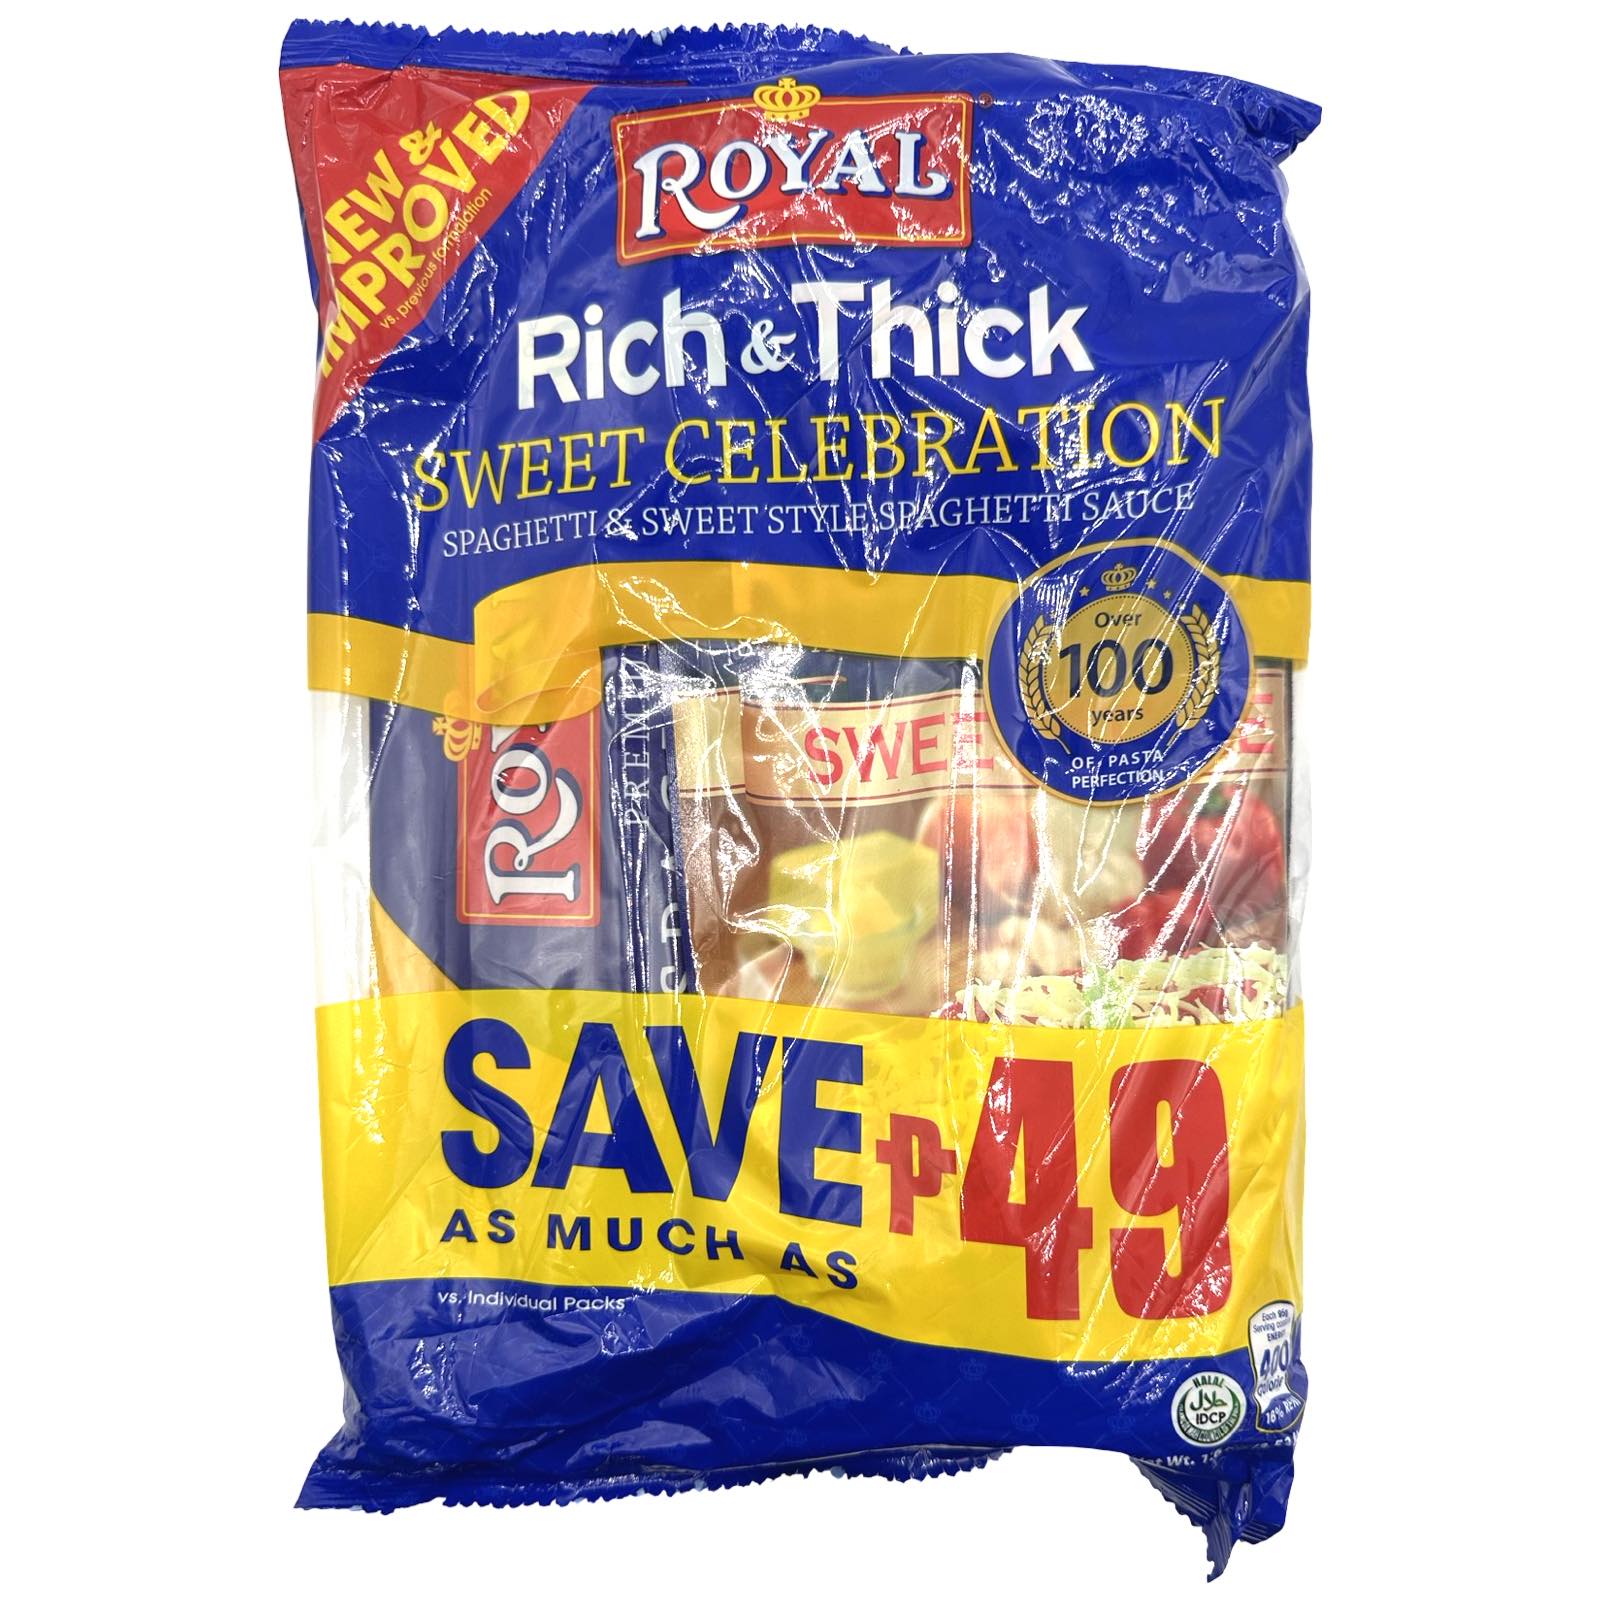 Royal - Rich & Thick - Sweet Celebration - Spaghetti & Sweet Style Spaghetti Sauce - 3.53 LBS